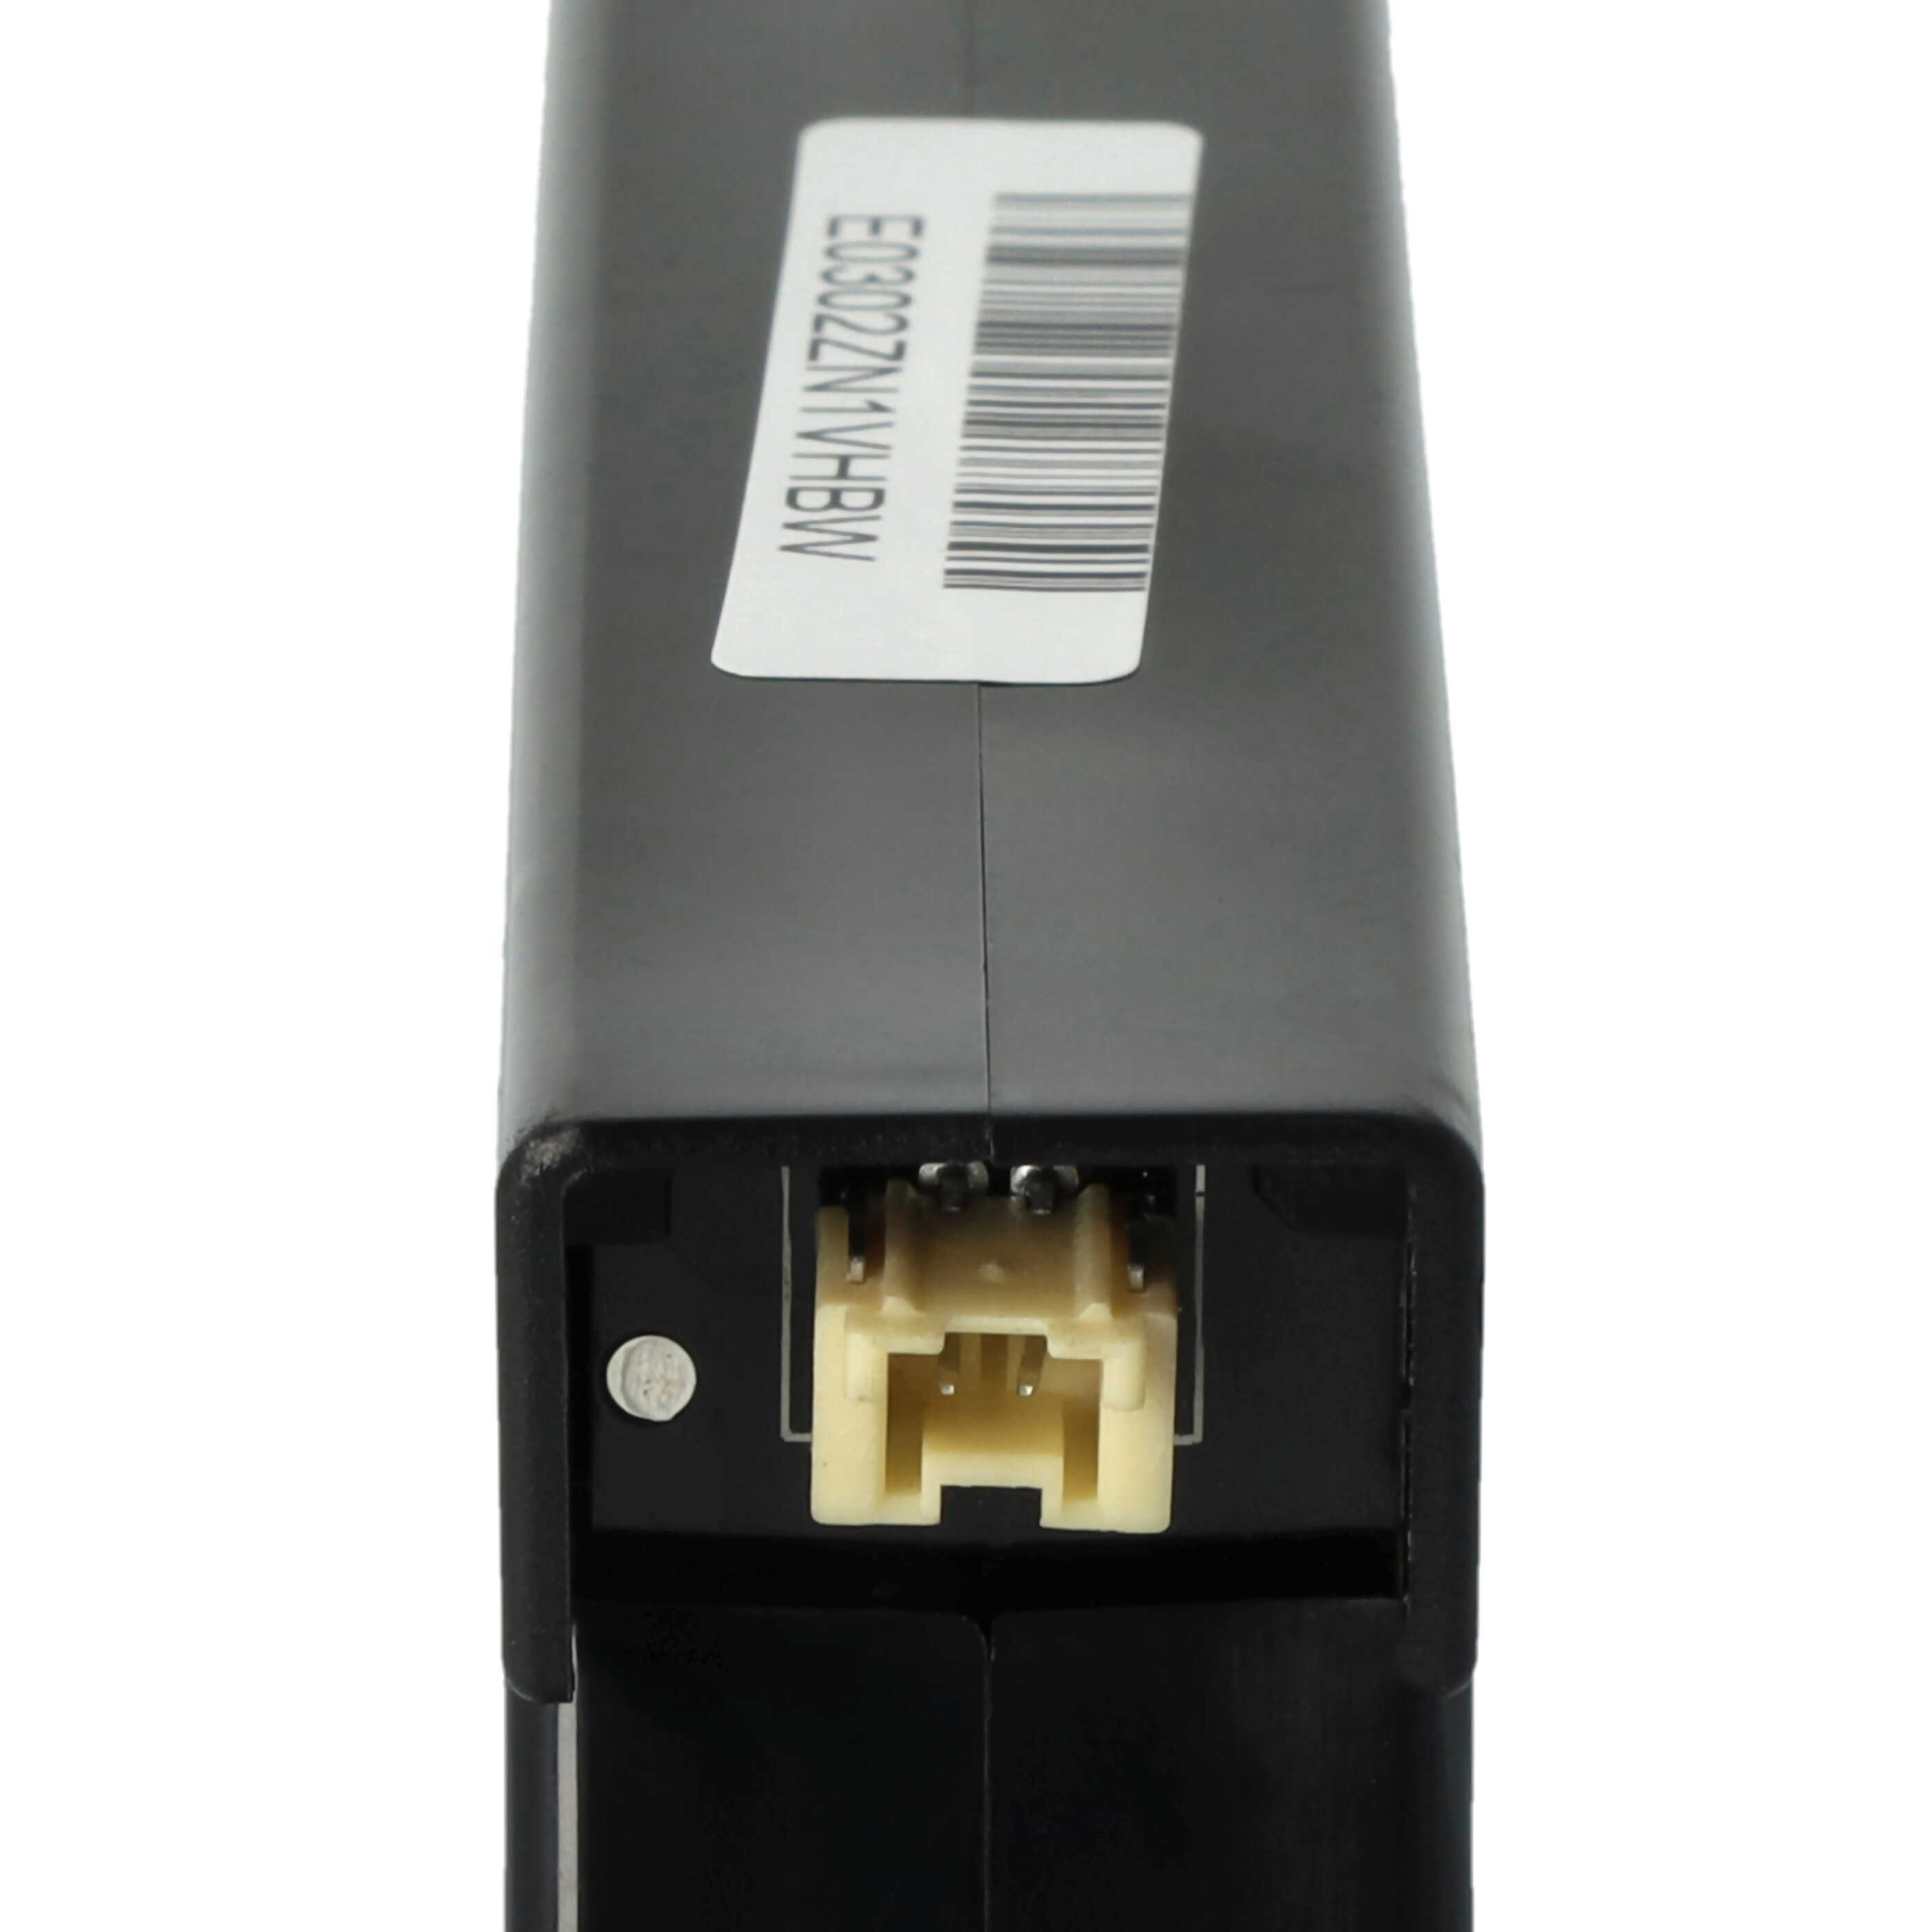 Akumulator do robota zamiennik LG BRL1, EAC60766102, EAC60766101, EAC60766103 - 2600 mAh 14,4 V Li-Ion, czarny